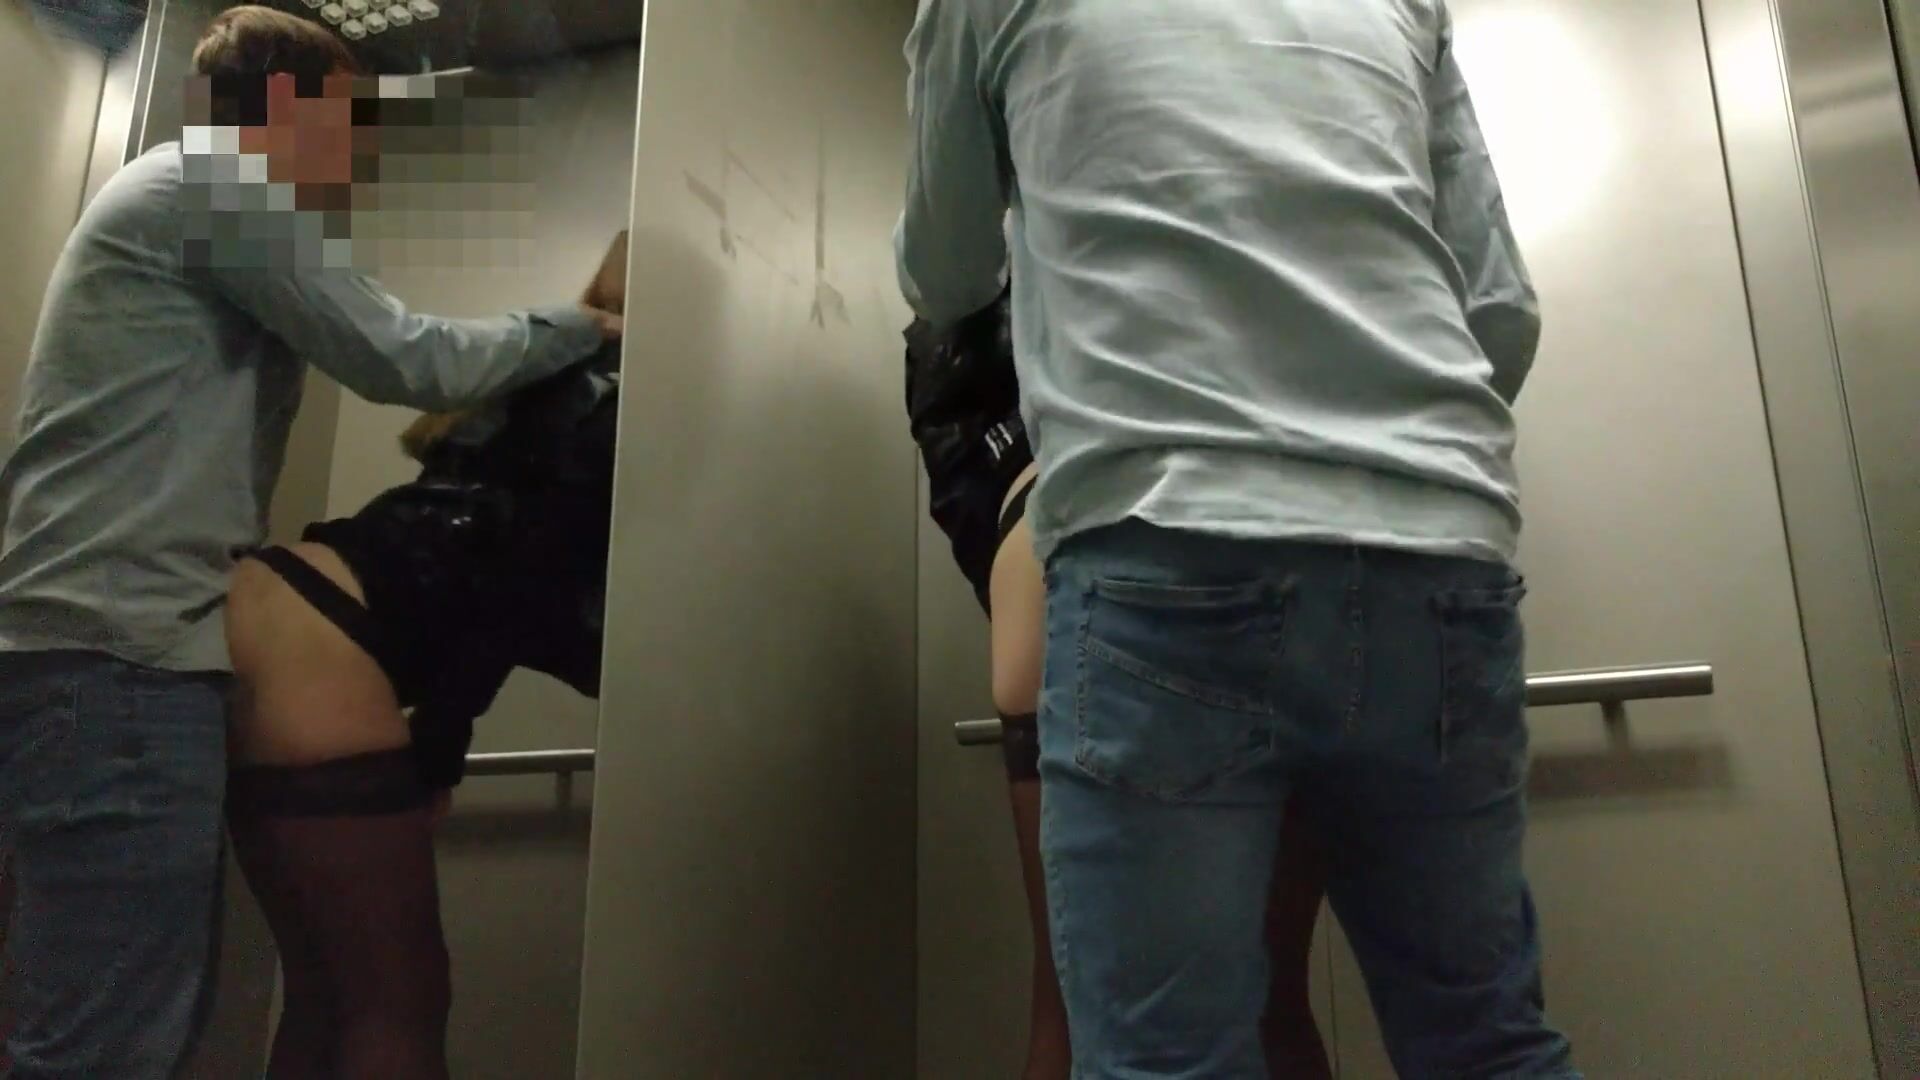 Voyeur couple does risky public porno in an elevator image